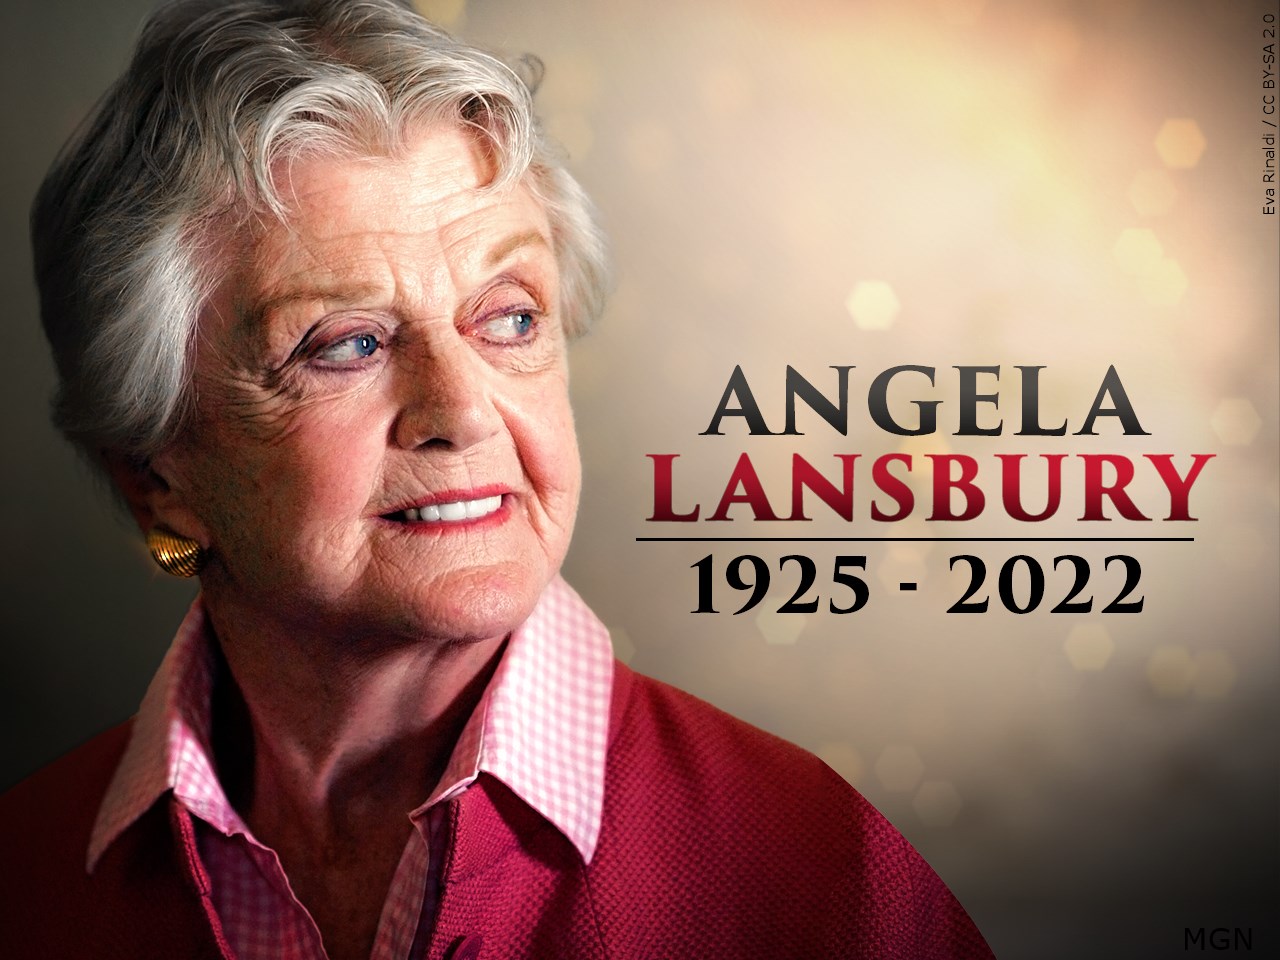 Angela Lansbury, Murder She Wrote star, dies at 96 image